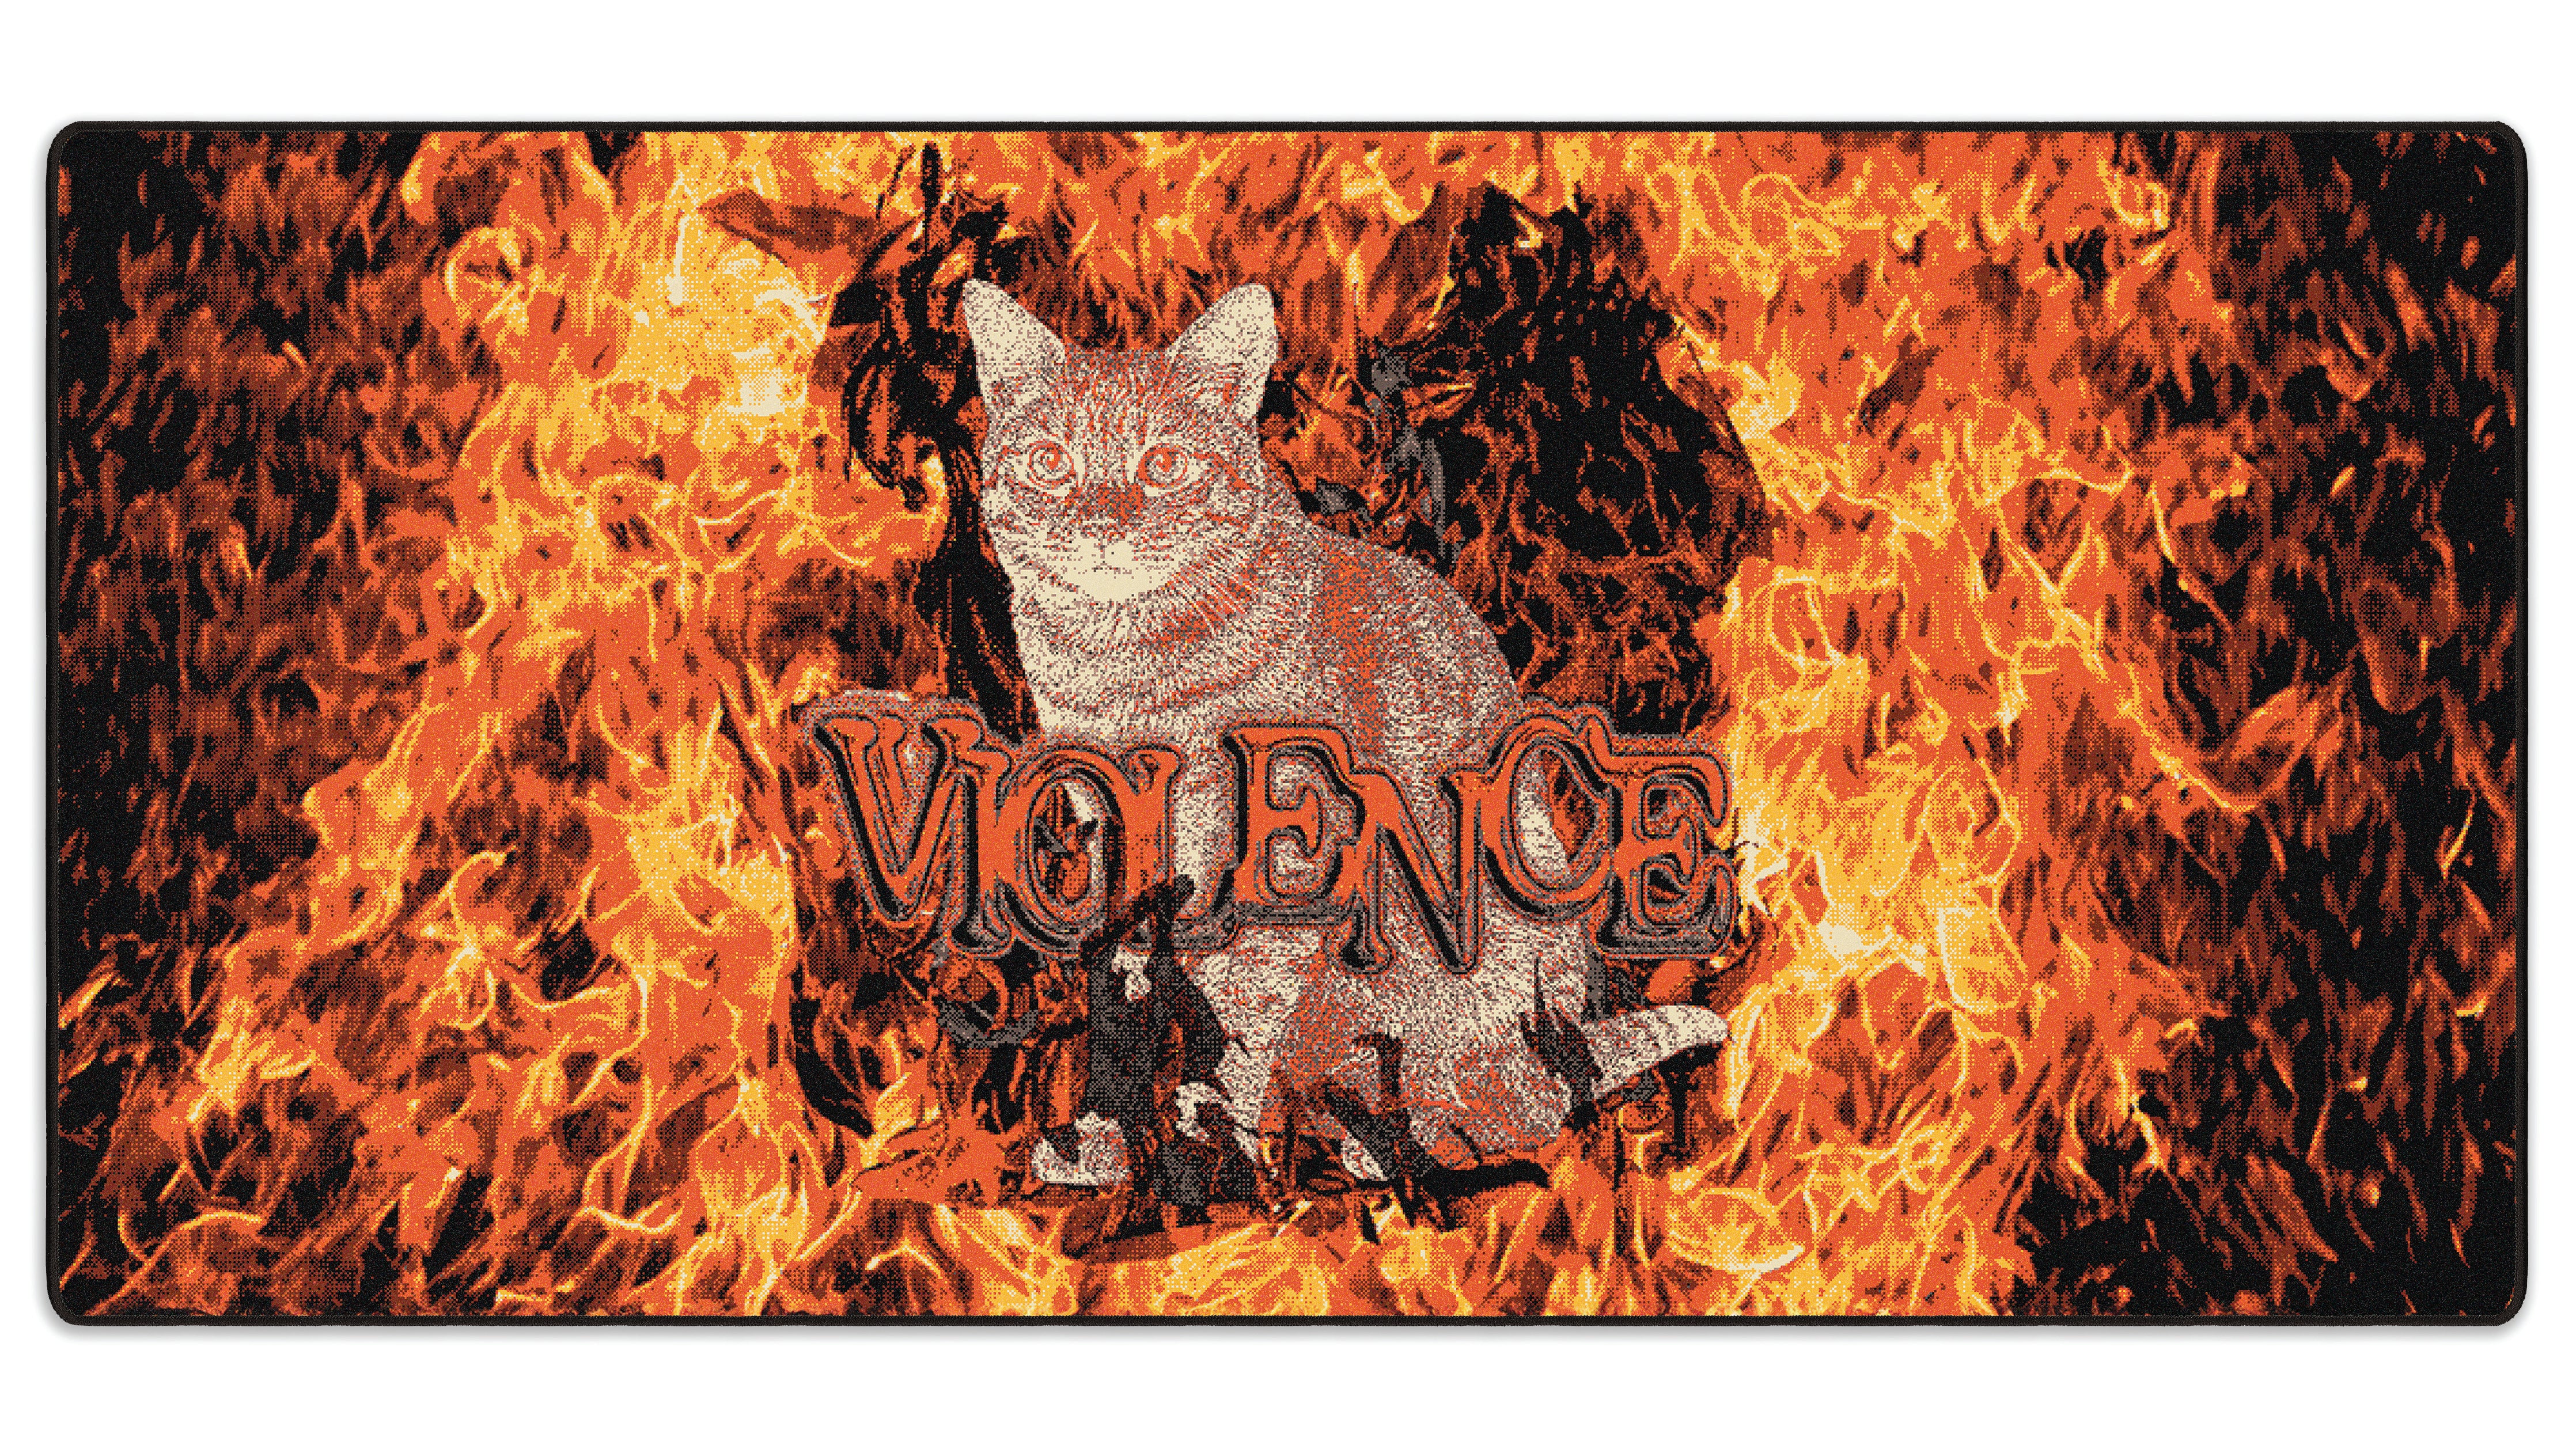 Violence, by Dogecore - The Mousepad Company